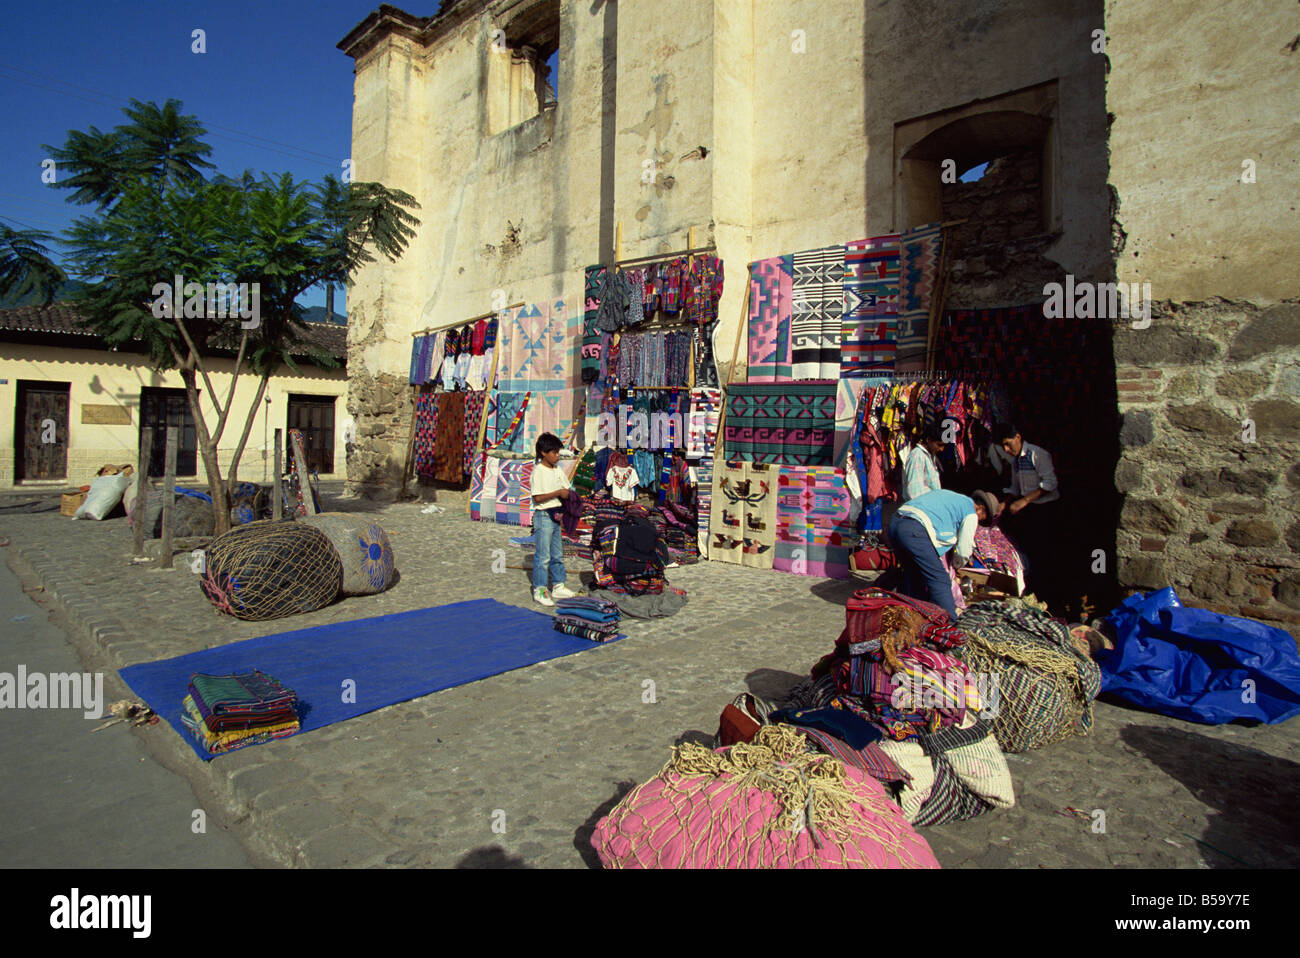 Lokalen indischen Souvenirstände, Antigua, Guatemala, Mittelamerika Stockfoto